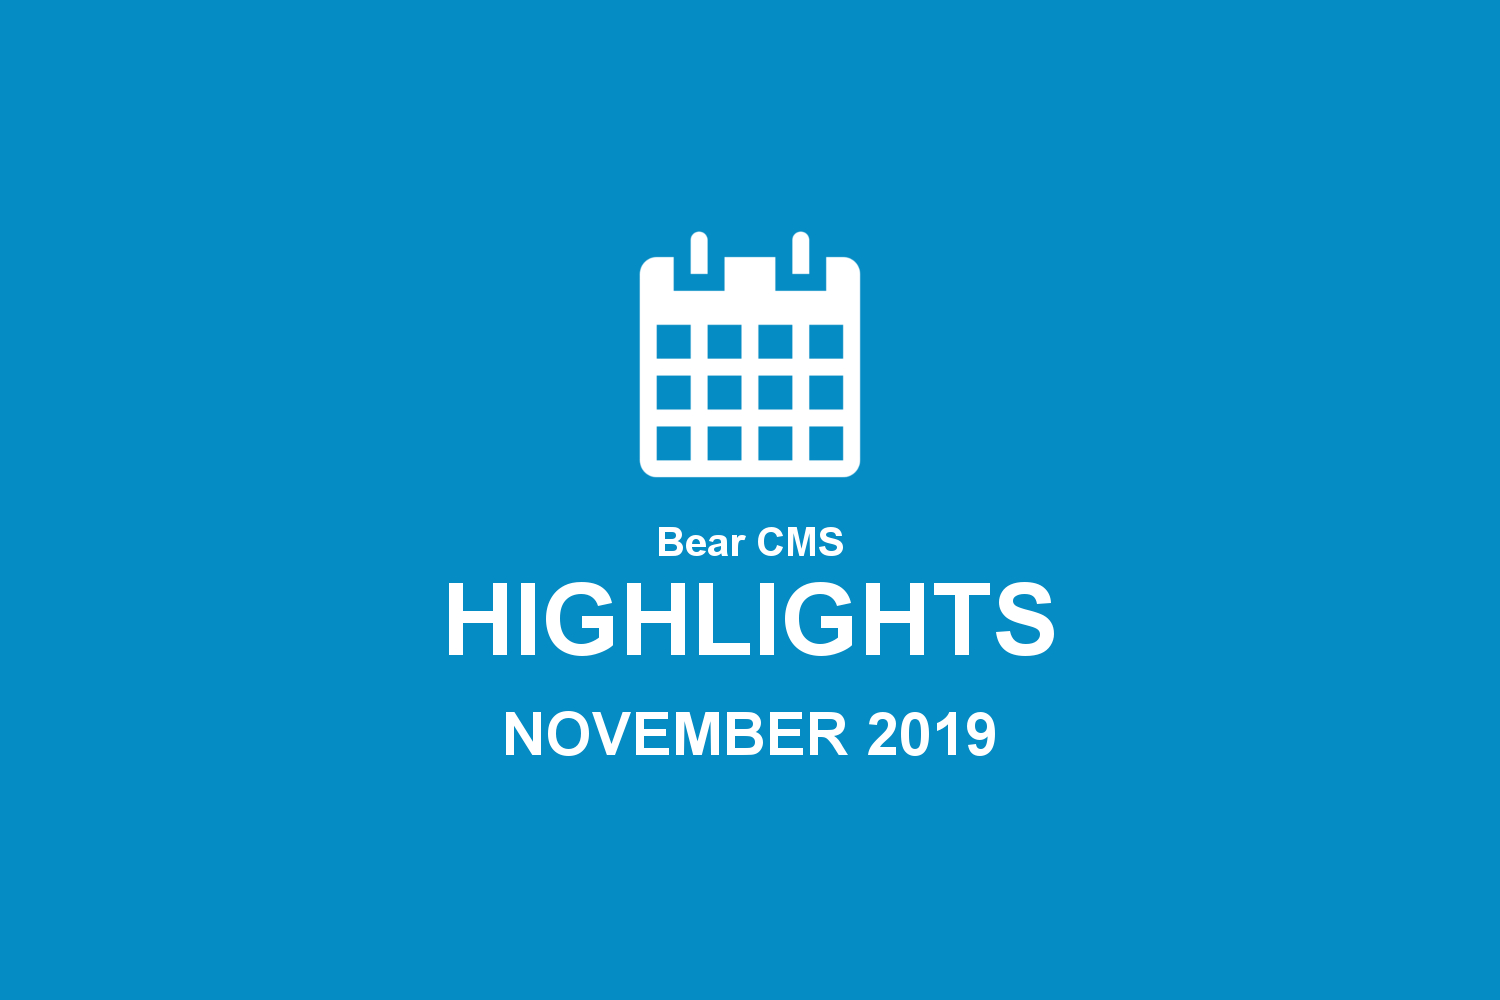 Bear CMS highlights (November 2019)